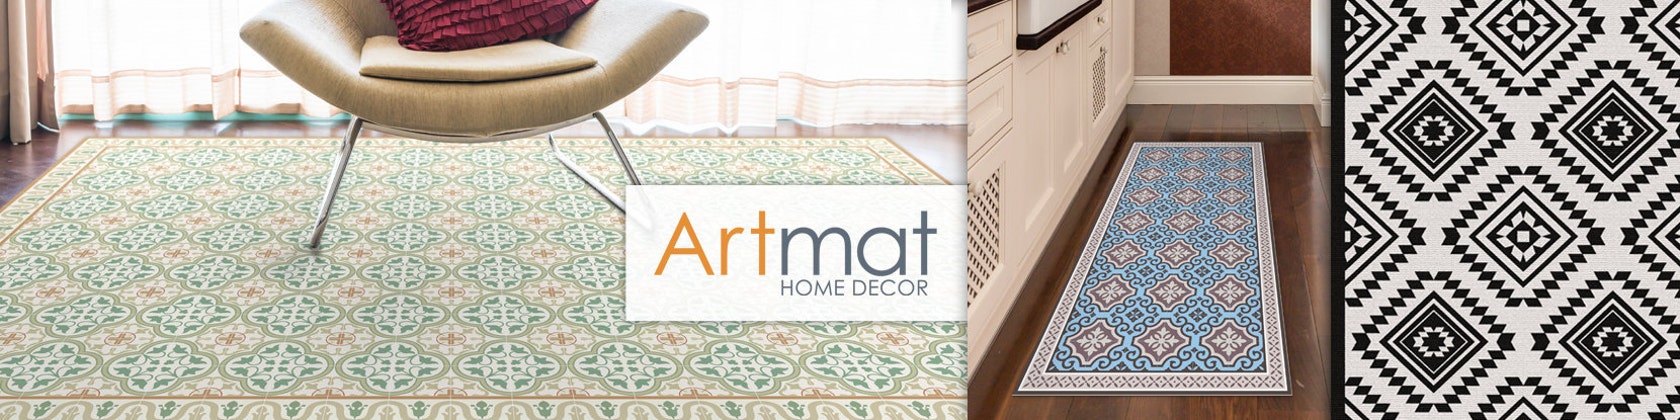 Studio K Blog, The art of making floor mats